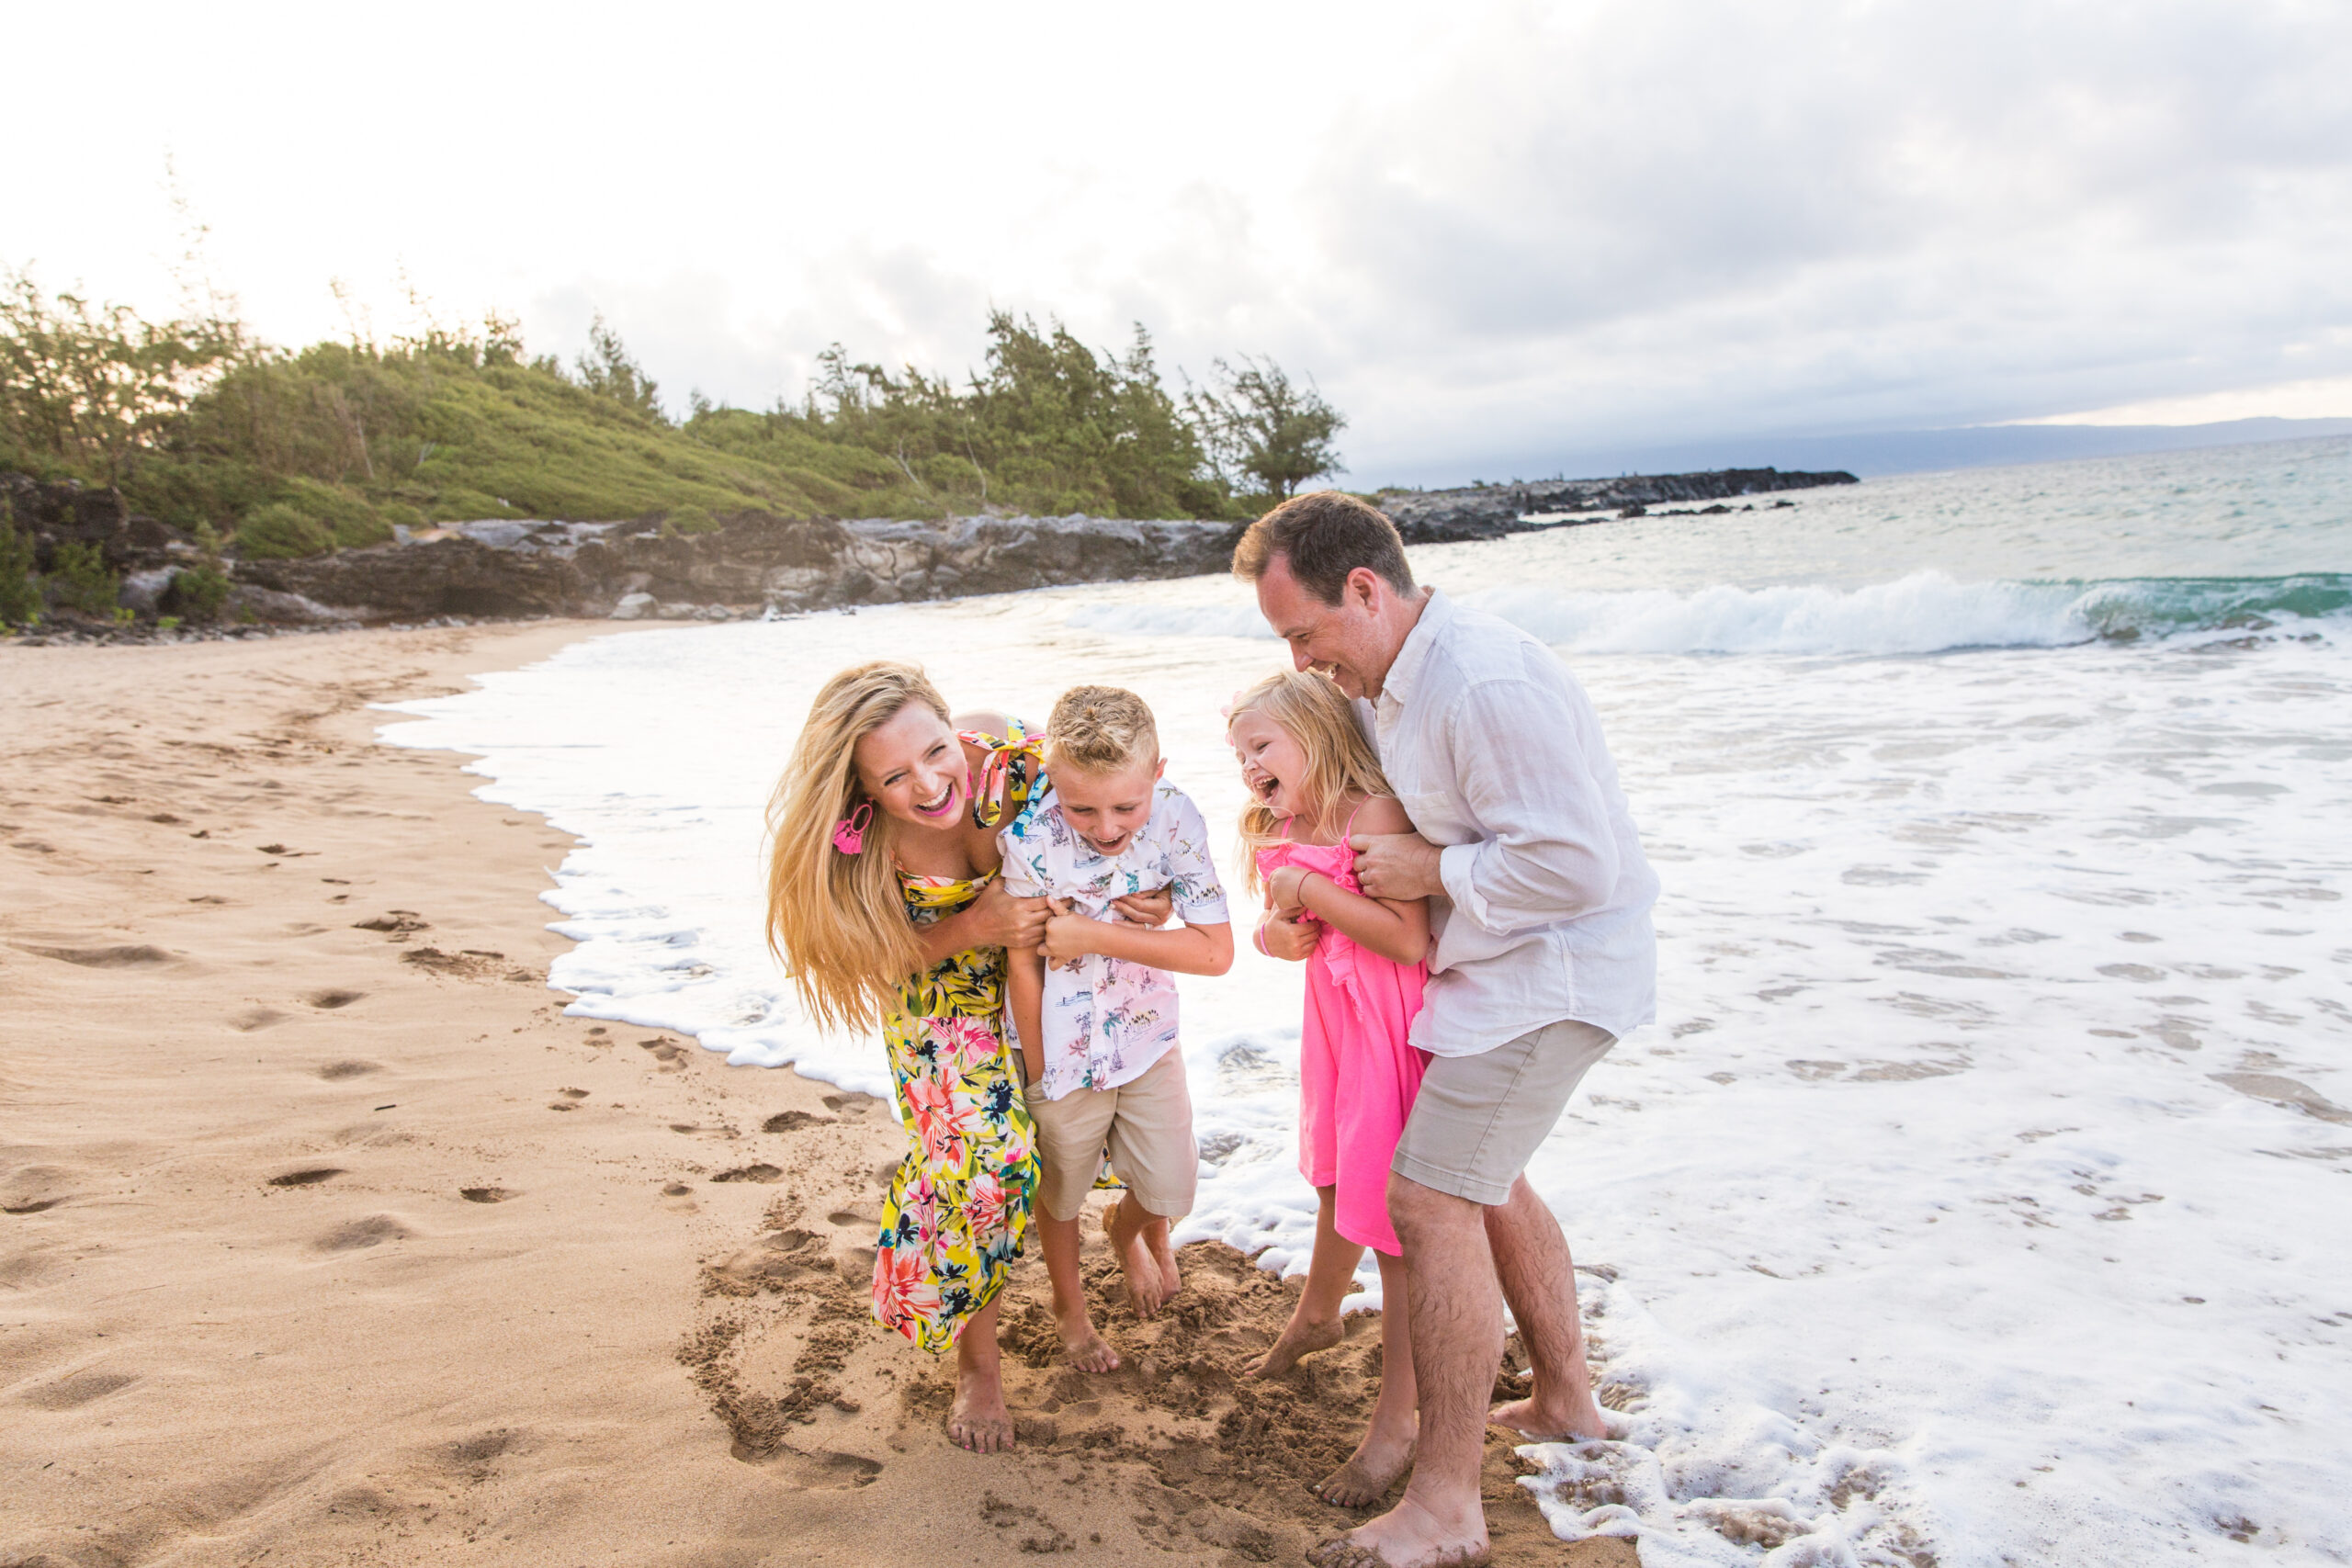 Maui Vacation Recap featured by popular Houston travel blogger, Fancy Ashley